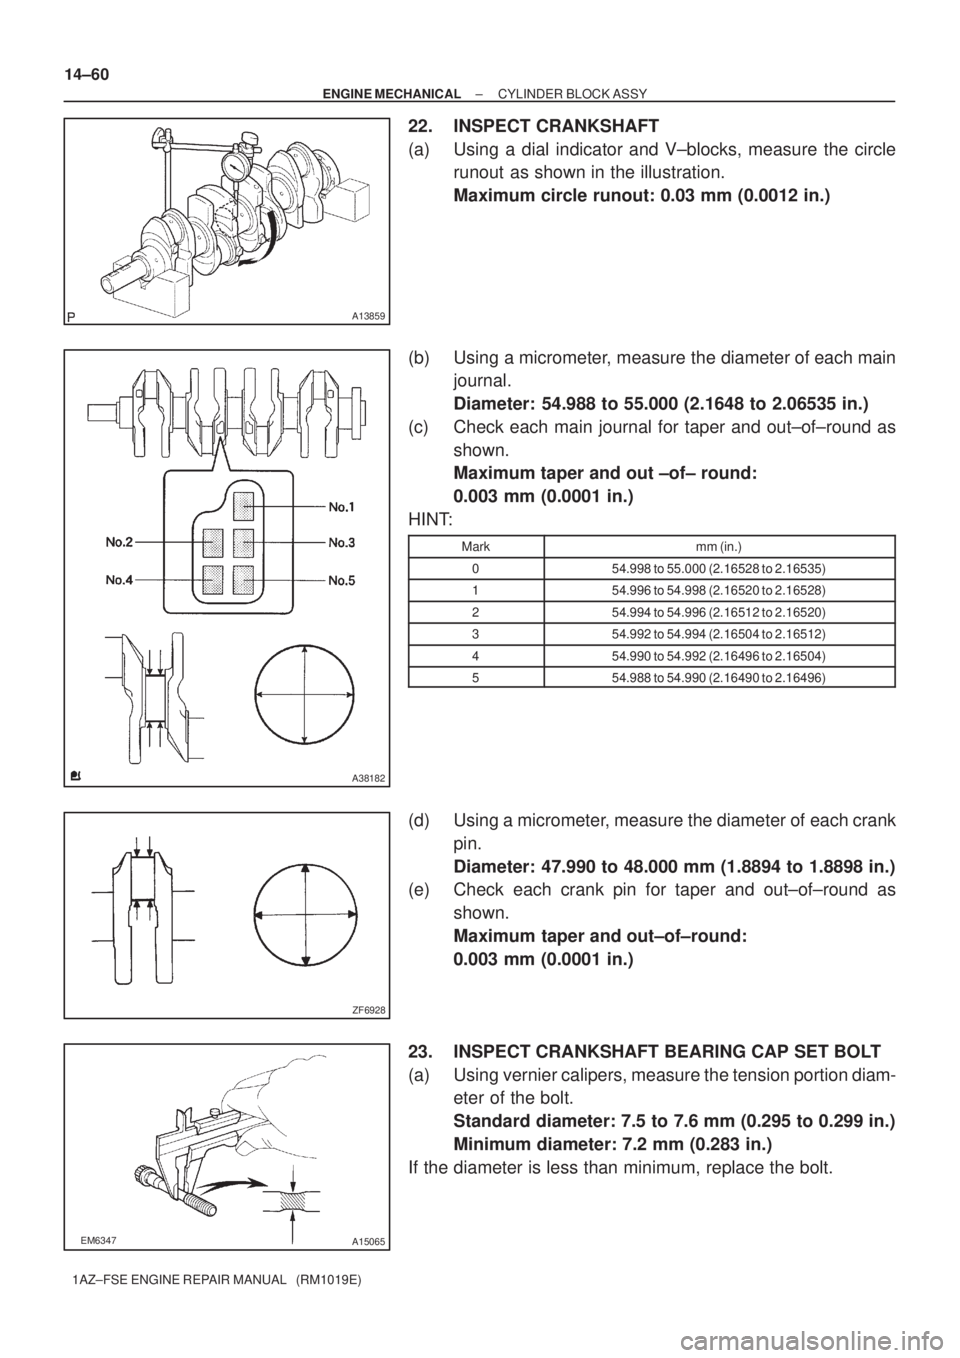 TOYOTA AVENSIS 2005  Service Repair Manual A13859
A38182
ZF6928
EM6347A15065
14±60
± ENGINE MECHANICALCYLINDER BLOCK ASSY
1AZ±FSE ENGINE REPAIR MANUAL   (RM1019E)
22. INSPECT CRANKSHAFT
(a) Using a dial indicator and V±blocks, measure the 